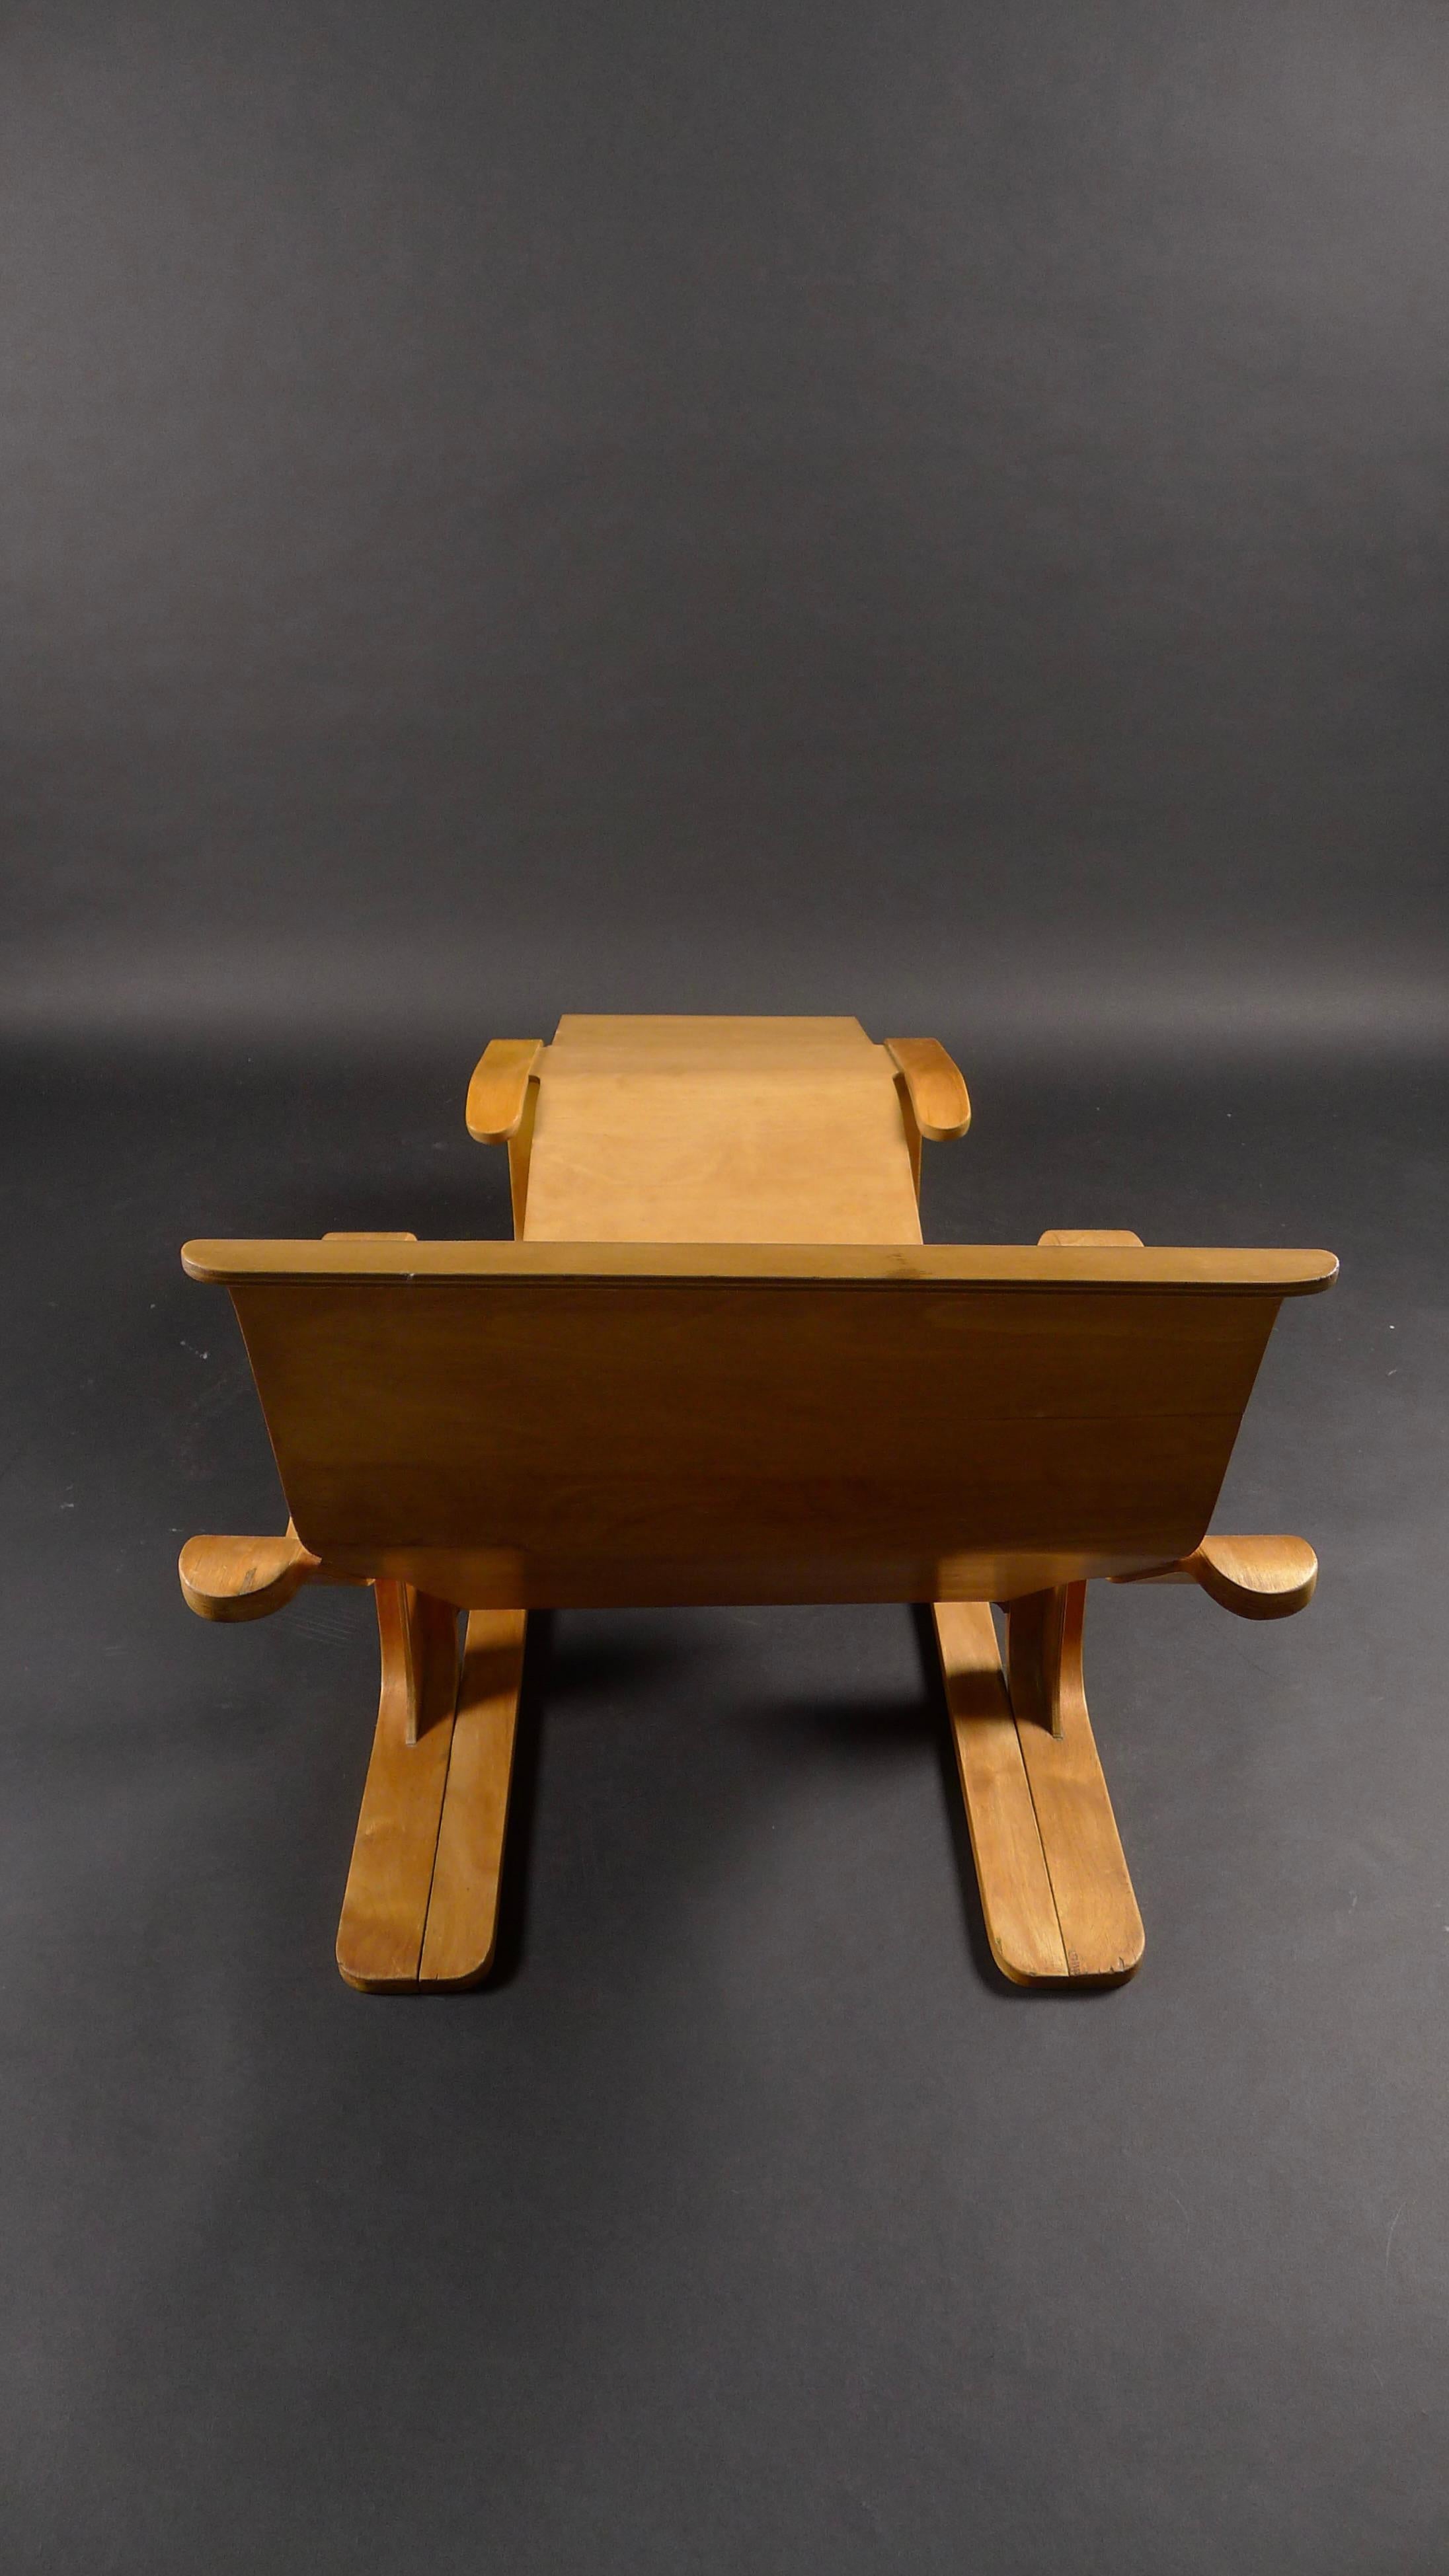 British Marcel Breuer, Long Chair, Birch Plywood, Isokon Furniture Ltd, Designed 1935